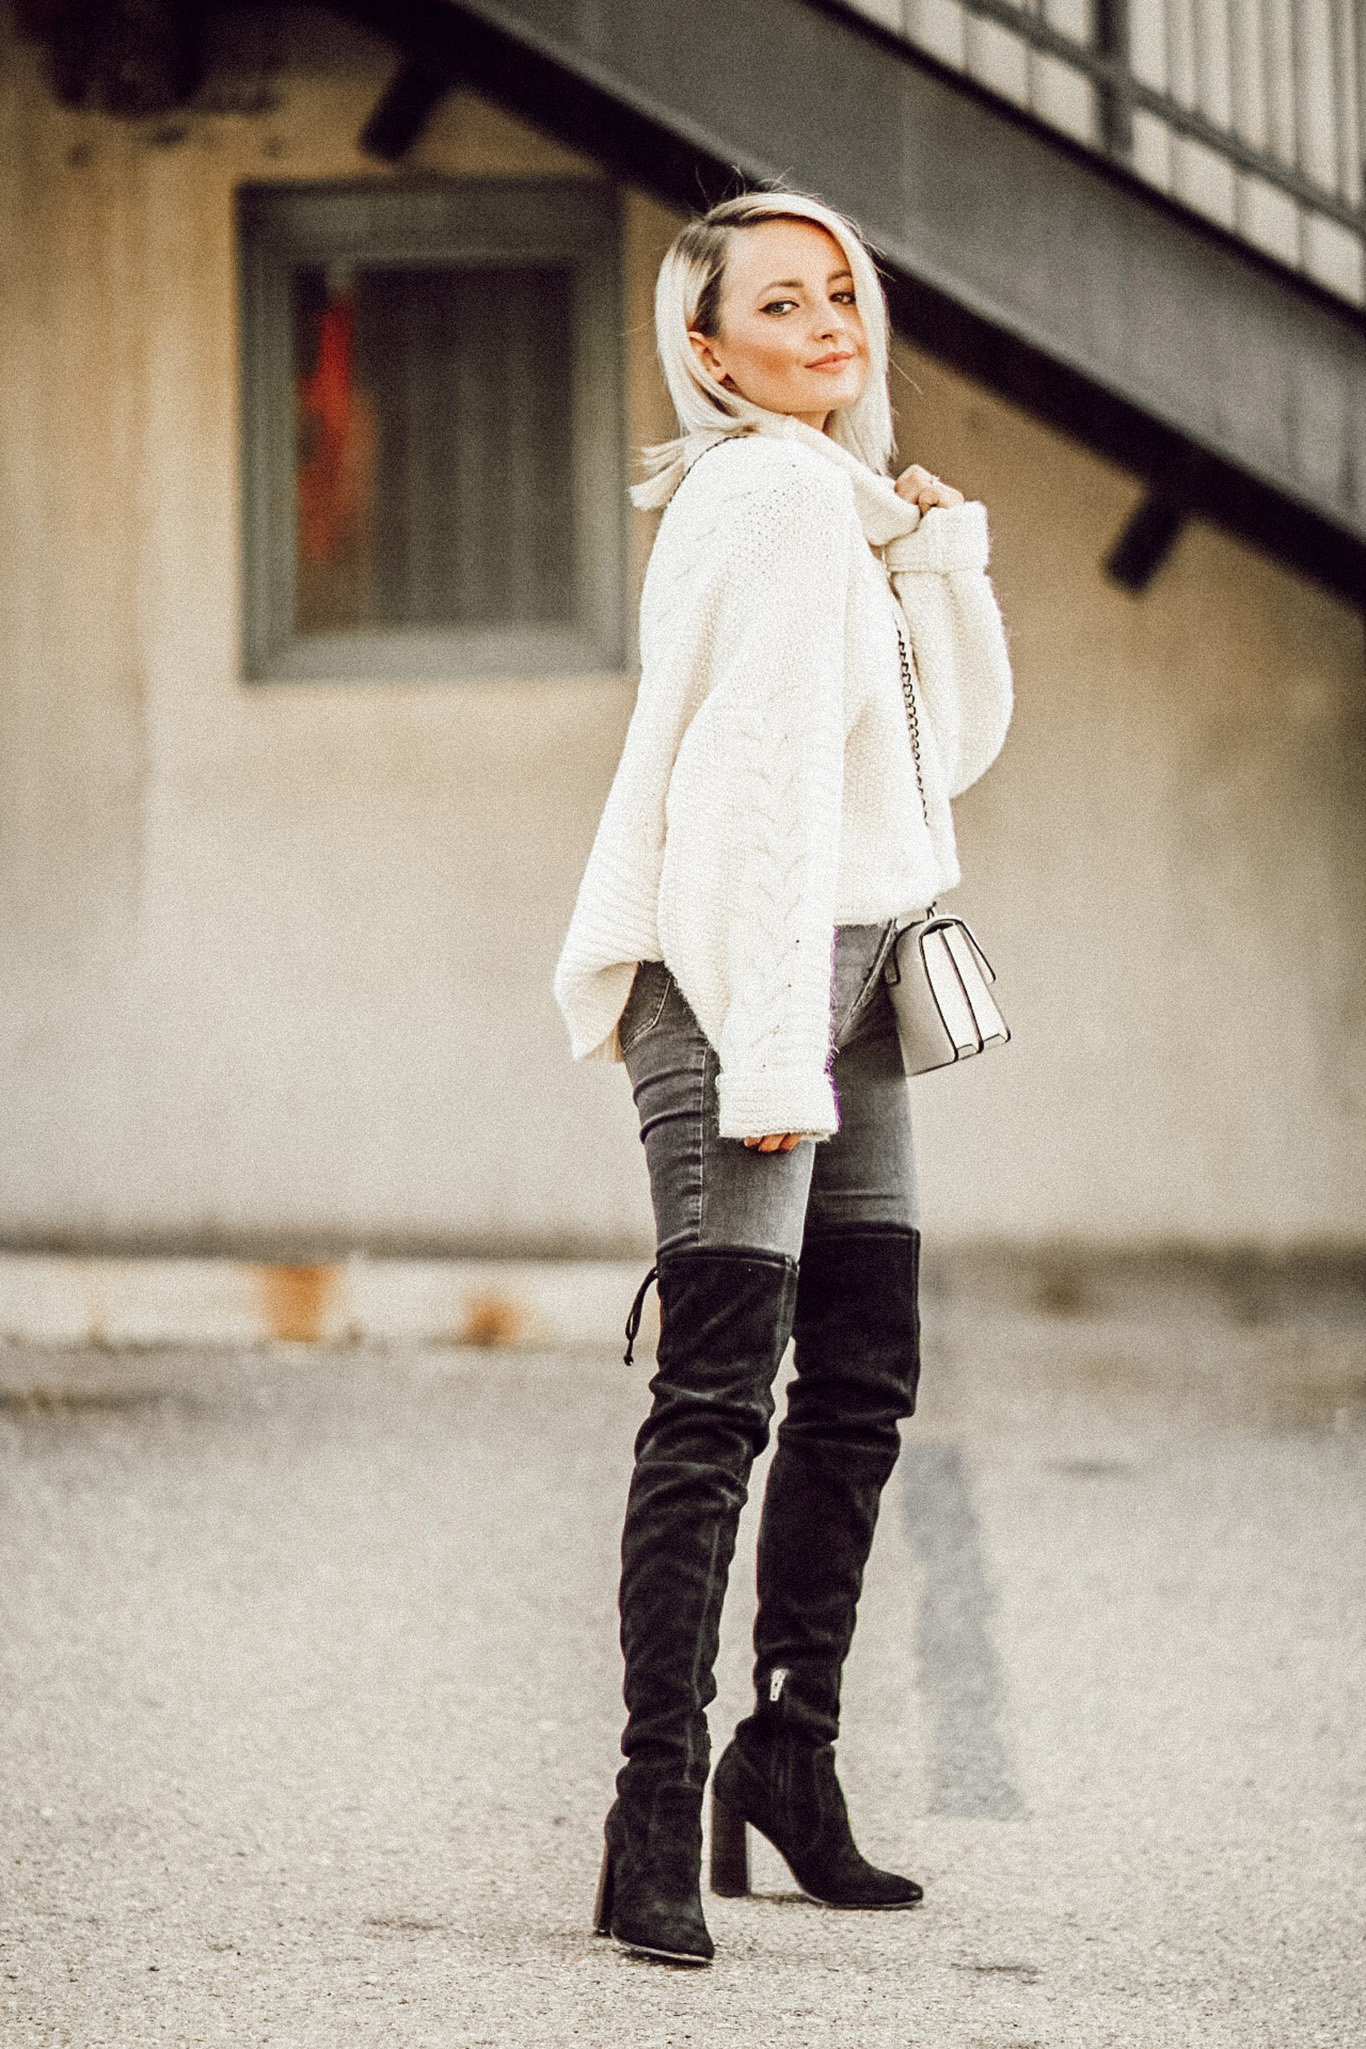 Alena Gidenko of modaprints.com shares her favorite cozy sweaters under $50 